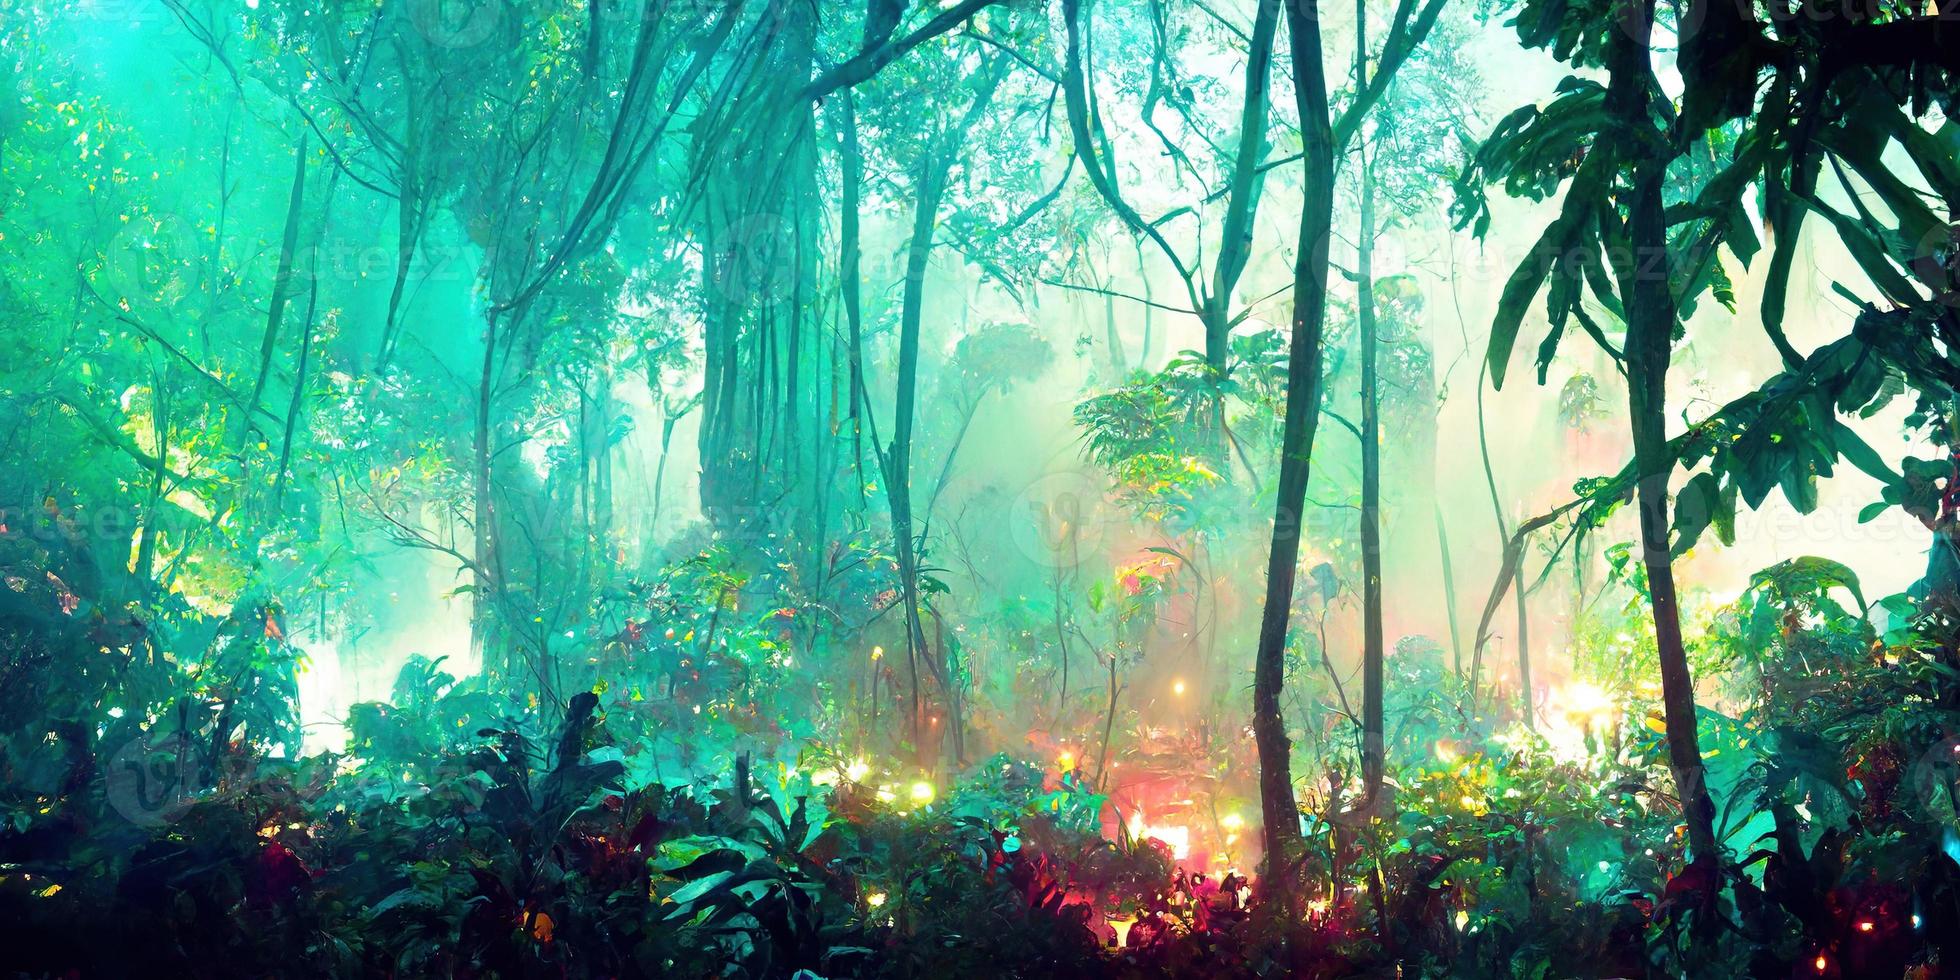 fantasi dimmig djungel under neon ljus illustration foto